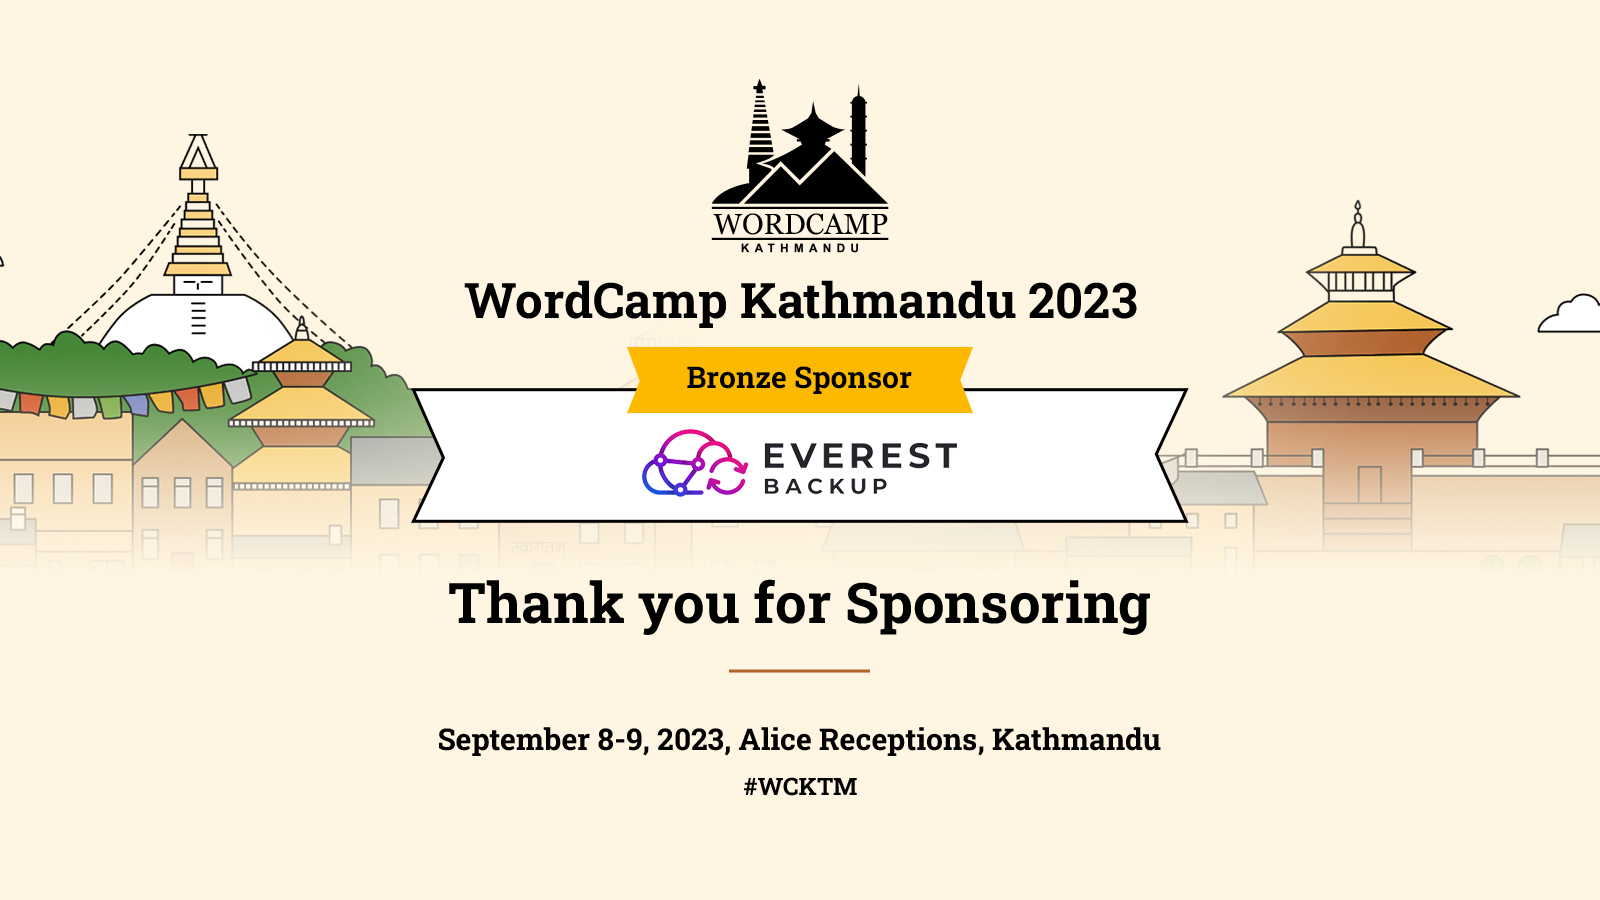 Thank you Everest Backup for sponsoring